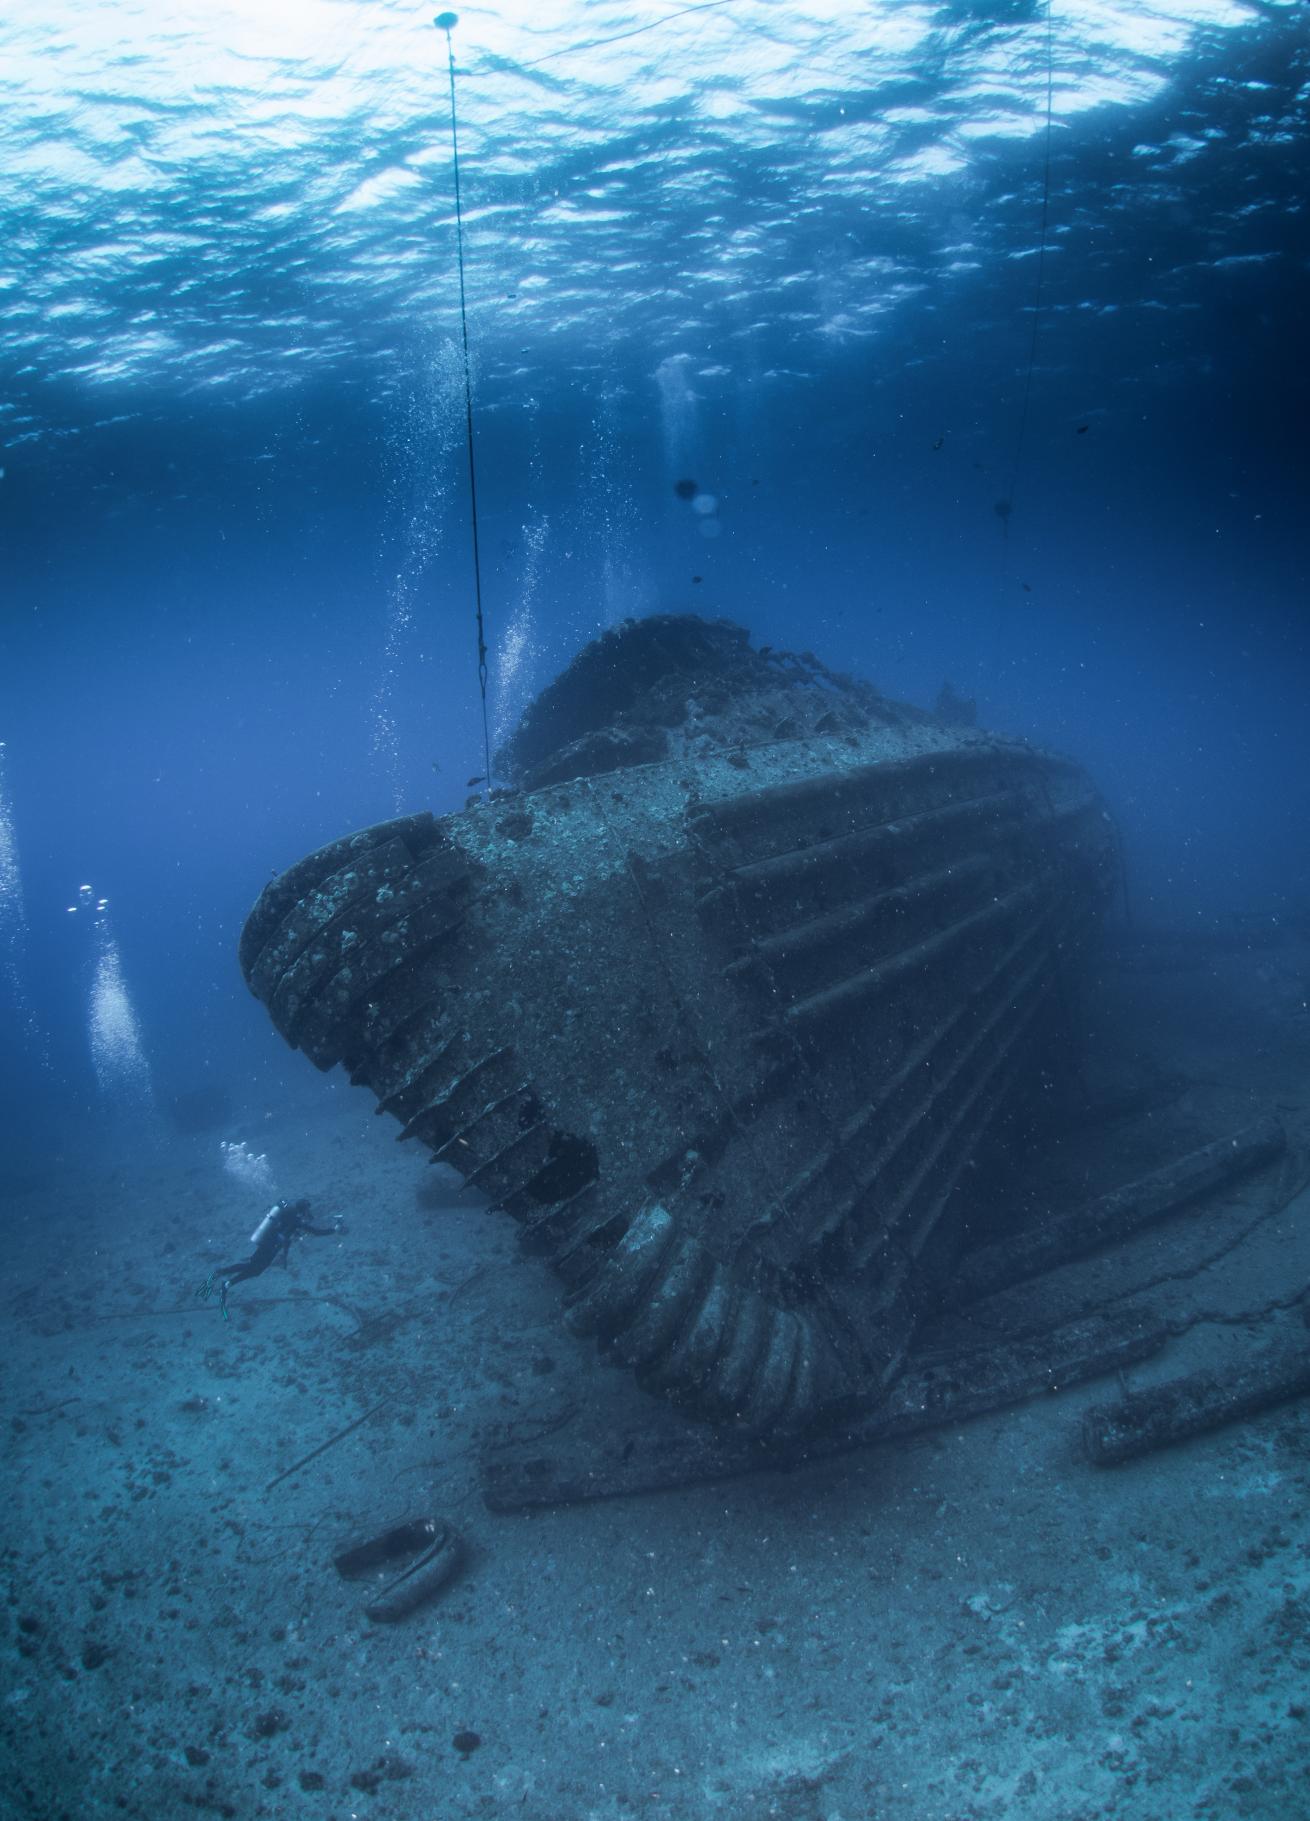 Scuba divers exploring underwater shipwreck in Oahu